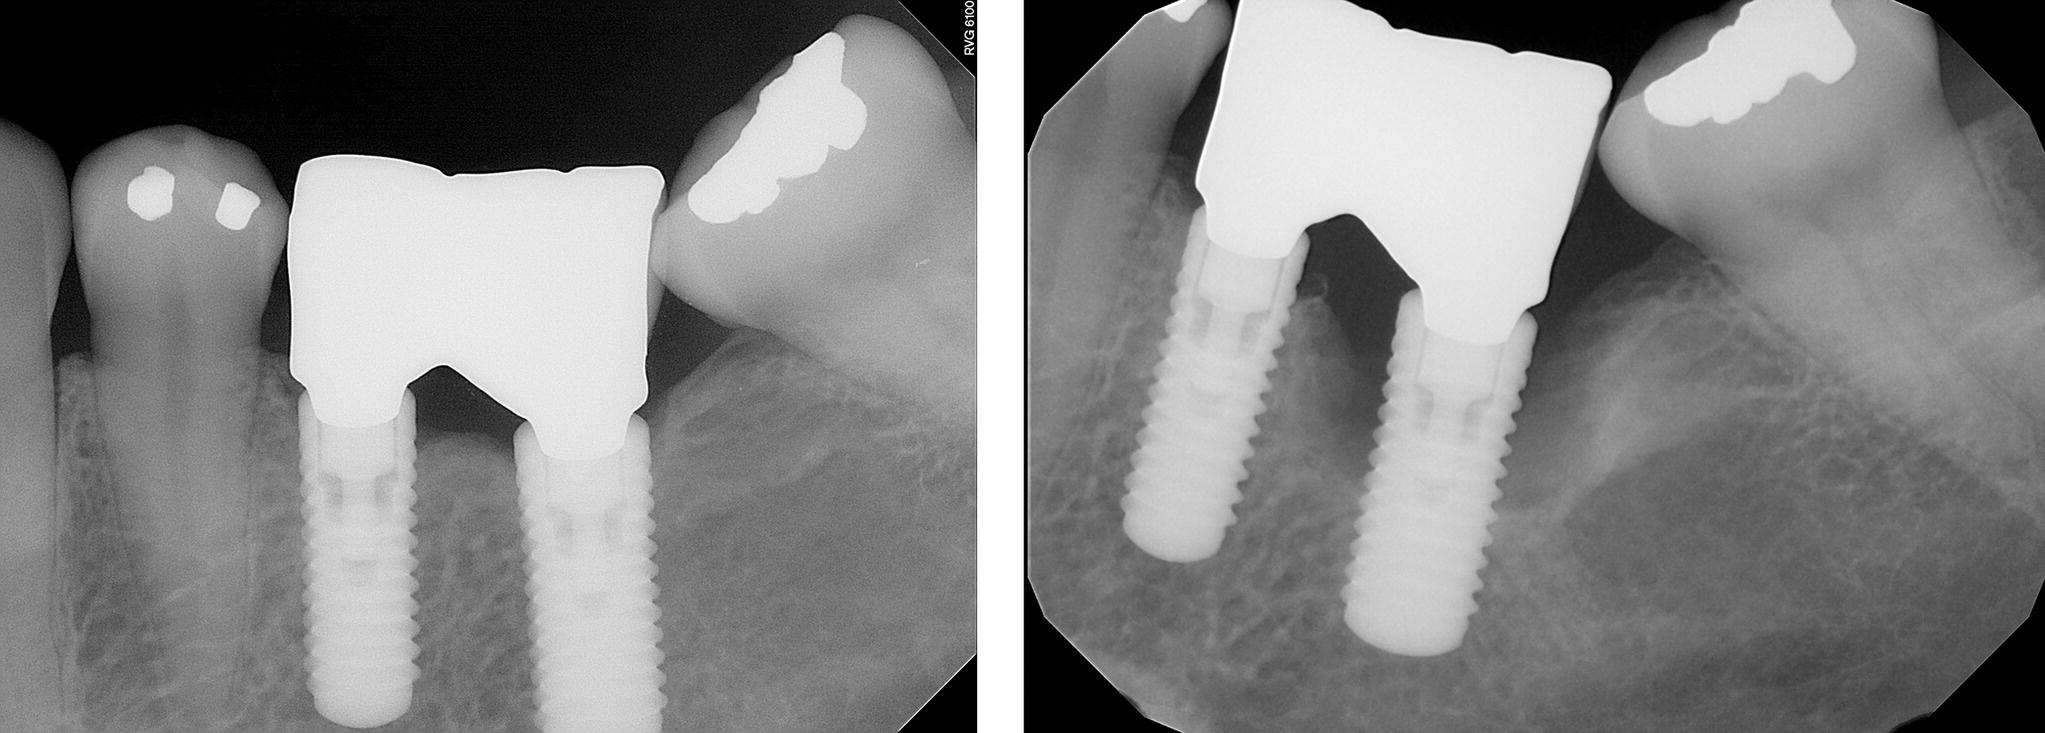 Radiograph of dental implant displaying implanted teeth prosthesis.